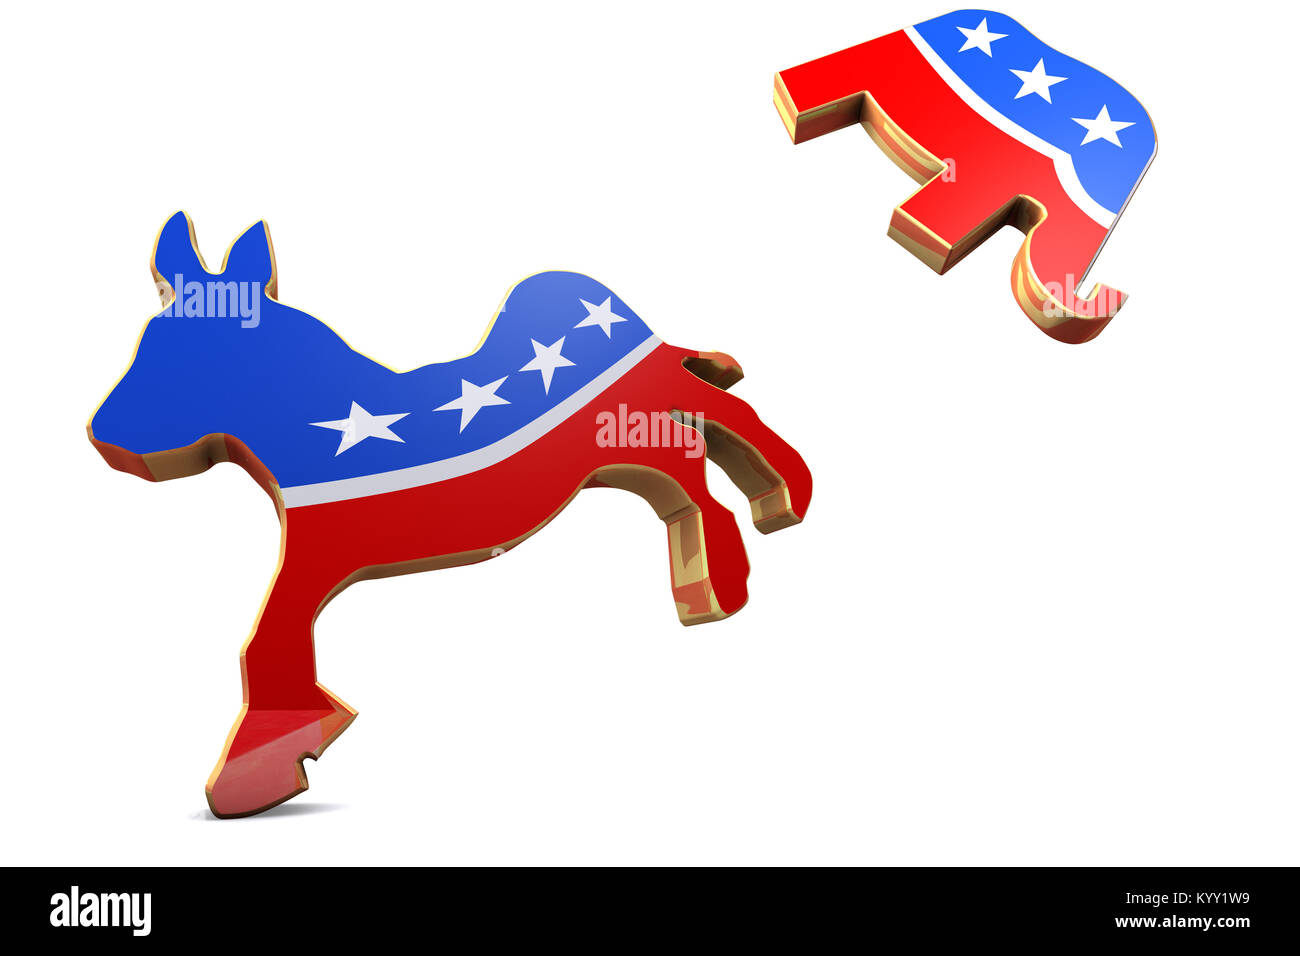 Democrat Party and Republican Party Symbols Stock Photo